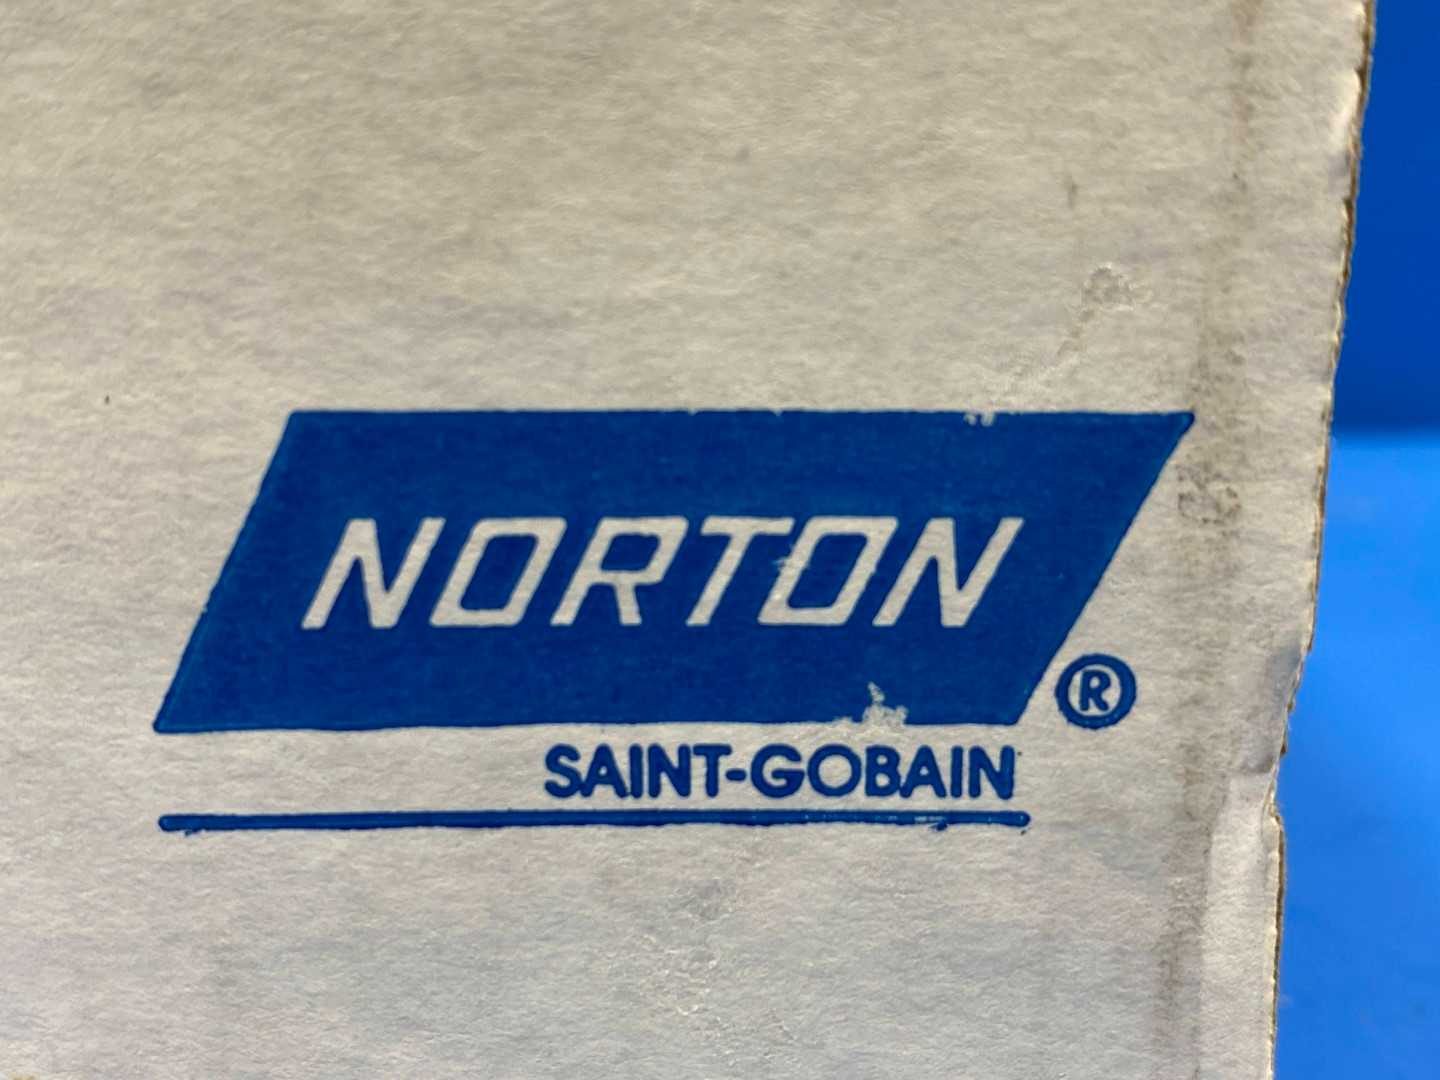 Norton R980P Grit 120 1/2" x 18" (Box of 50)